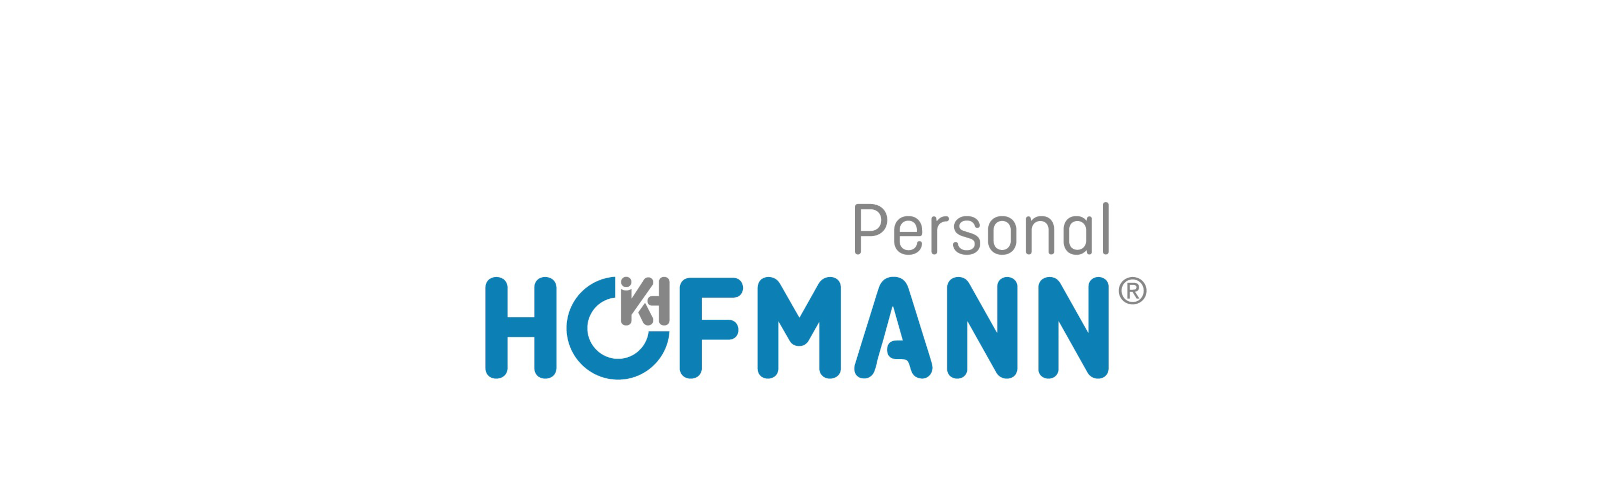 Logo Hofmann Personal